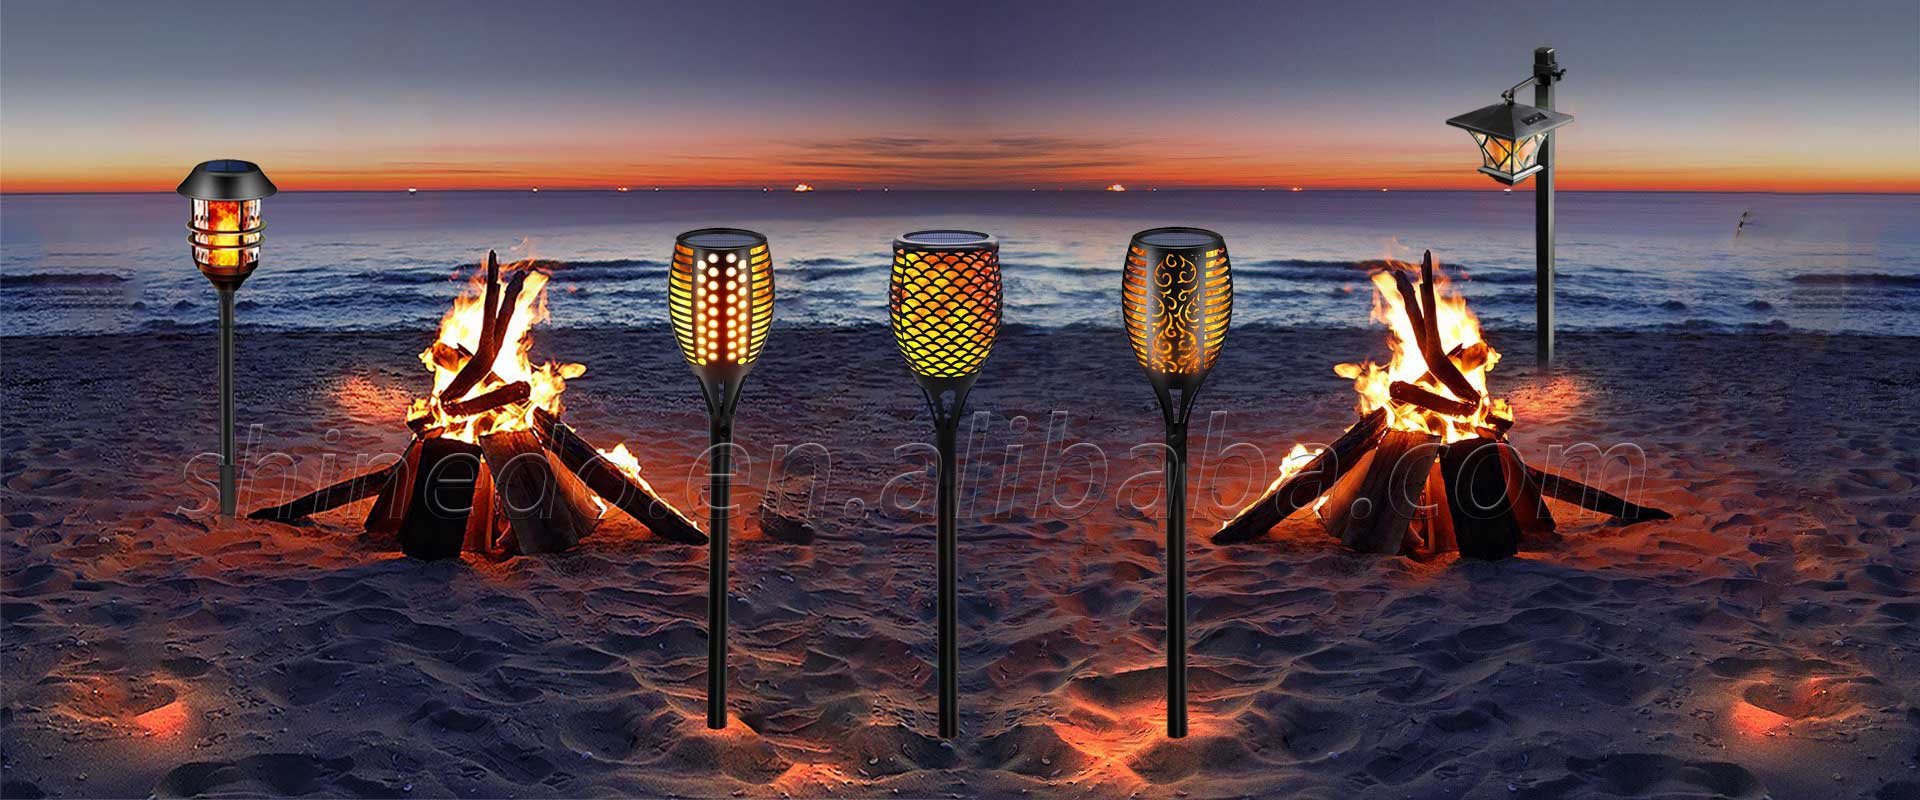 Solar Flickering Flame Garden Night light, Outdoor Dancing Flame Torch Lawn Lamp